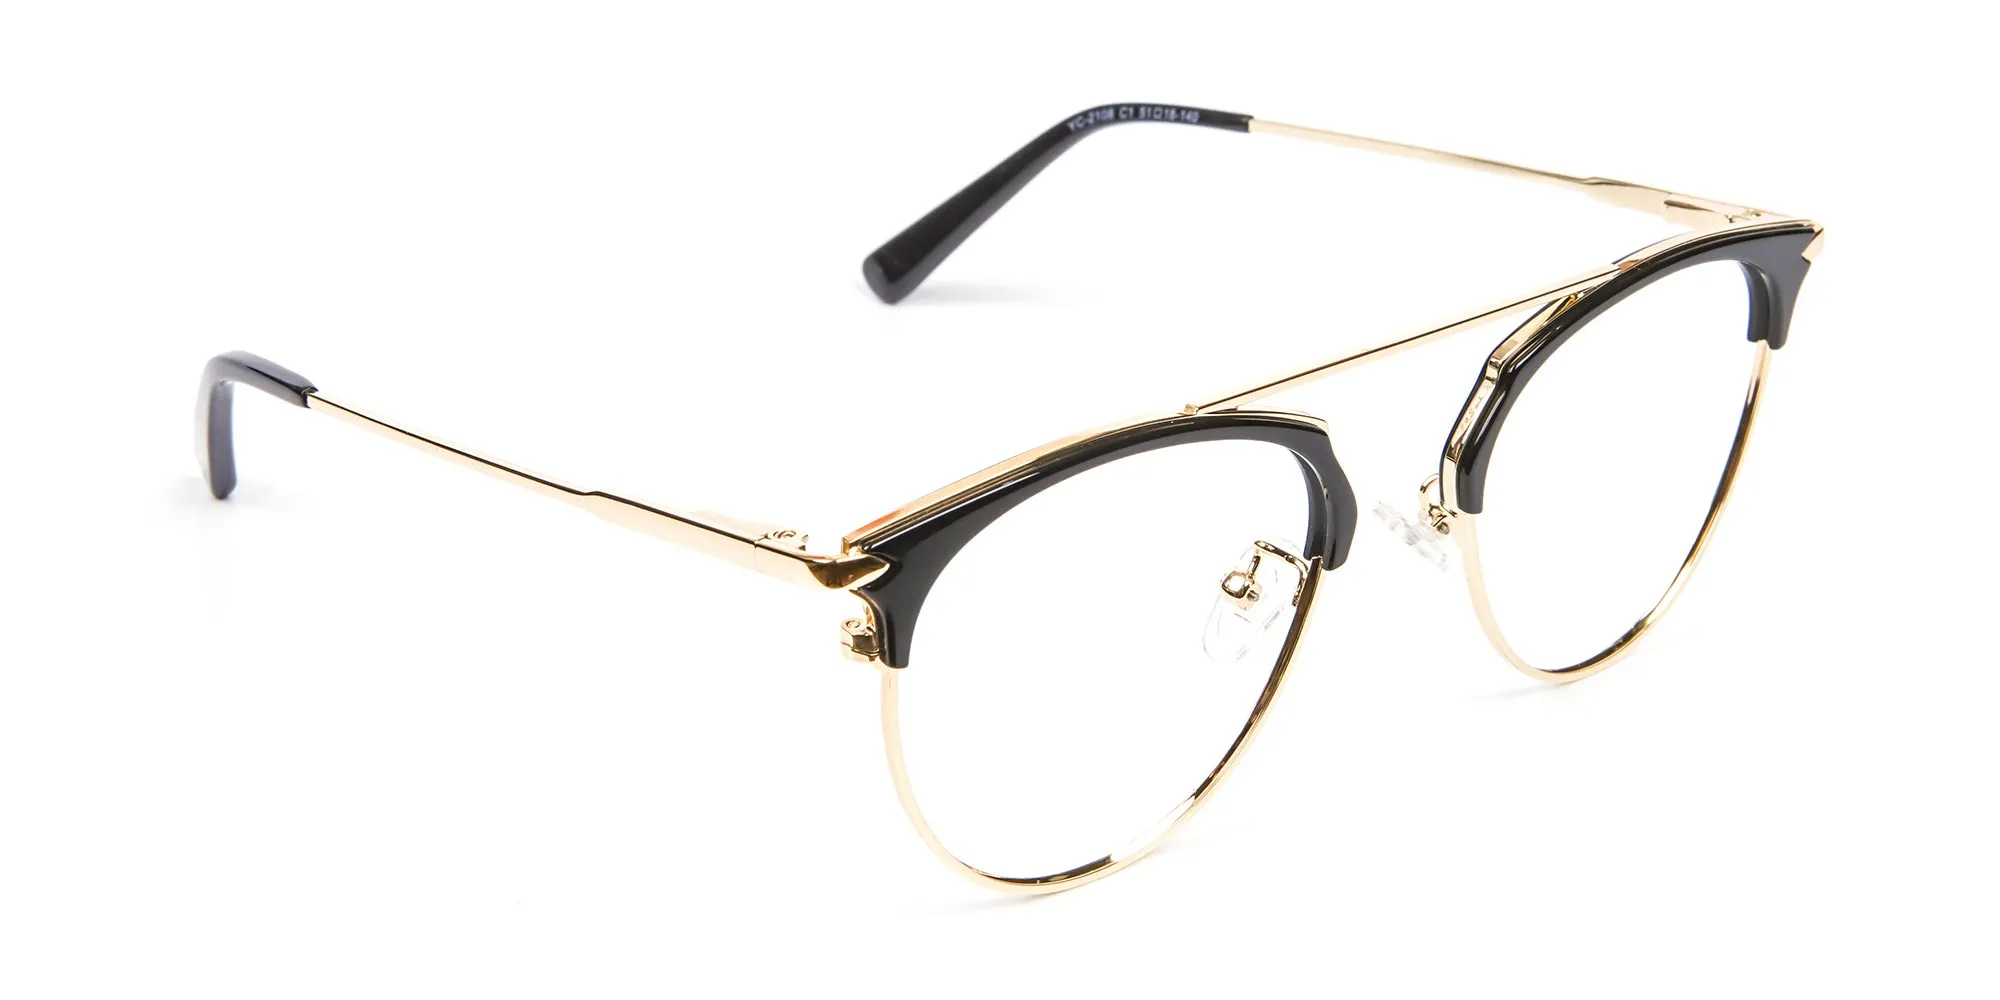 Black and Gold No-Nose Bridged Glasses - 2